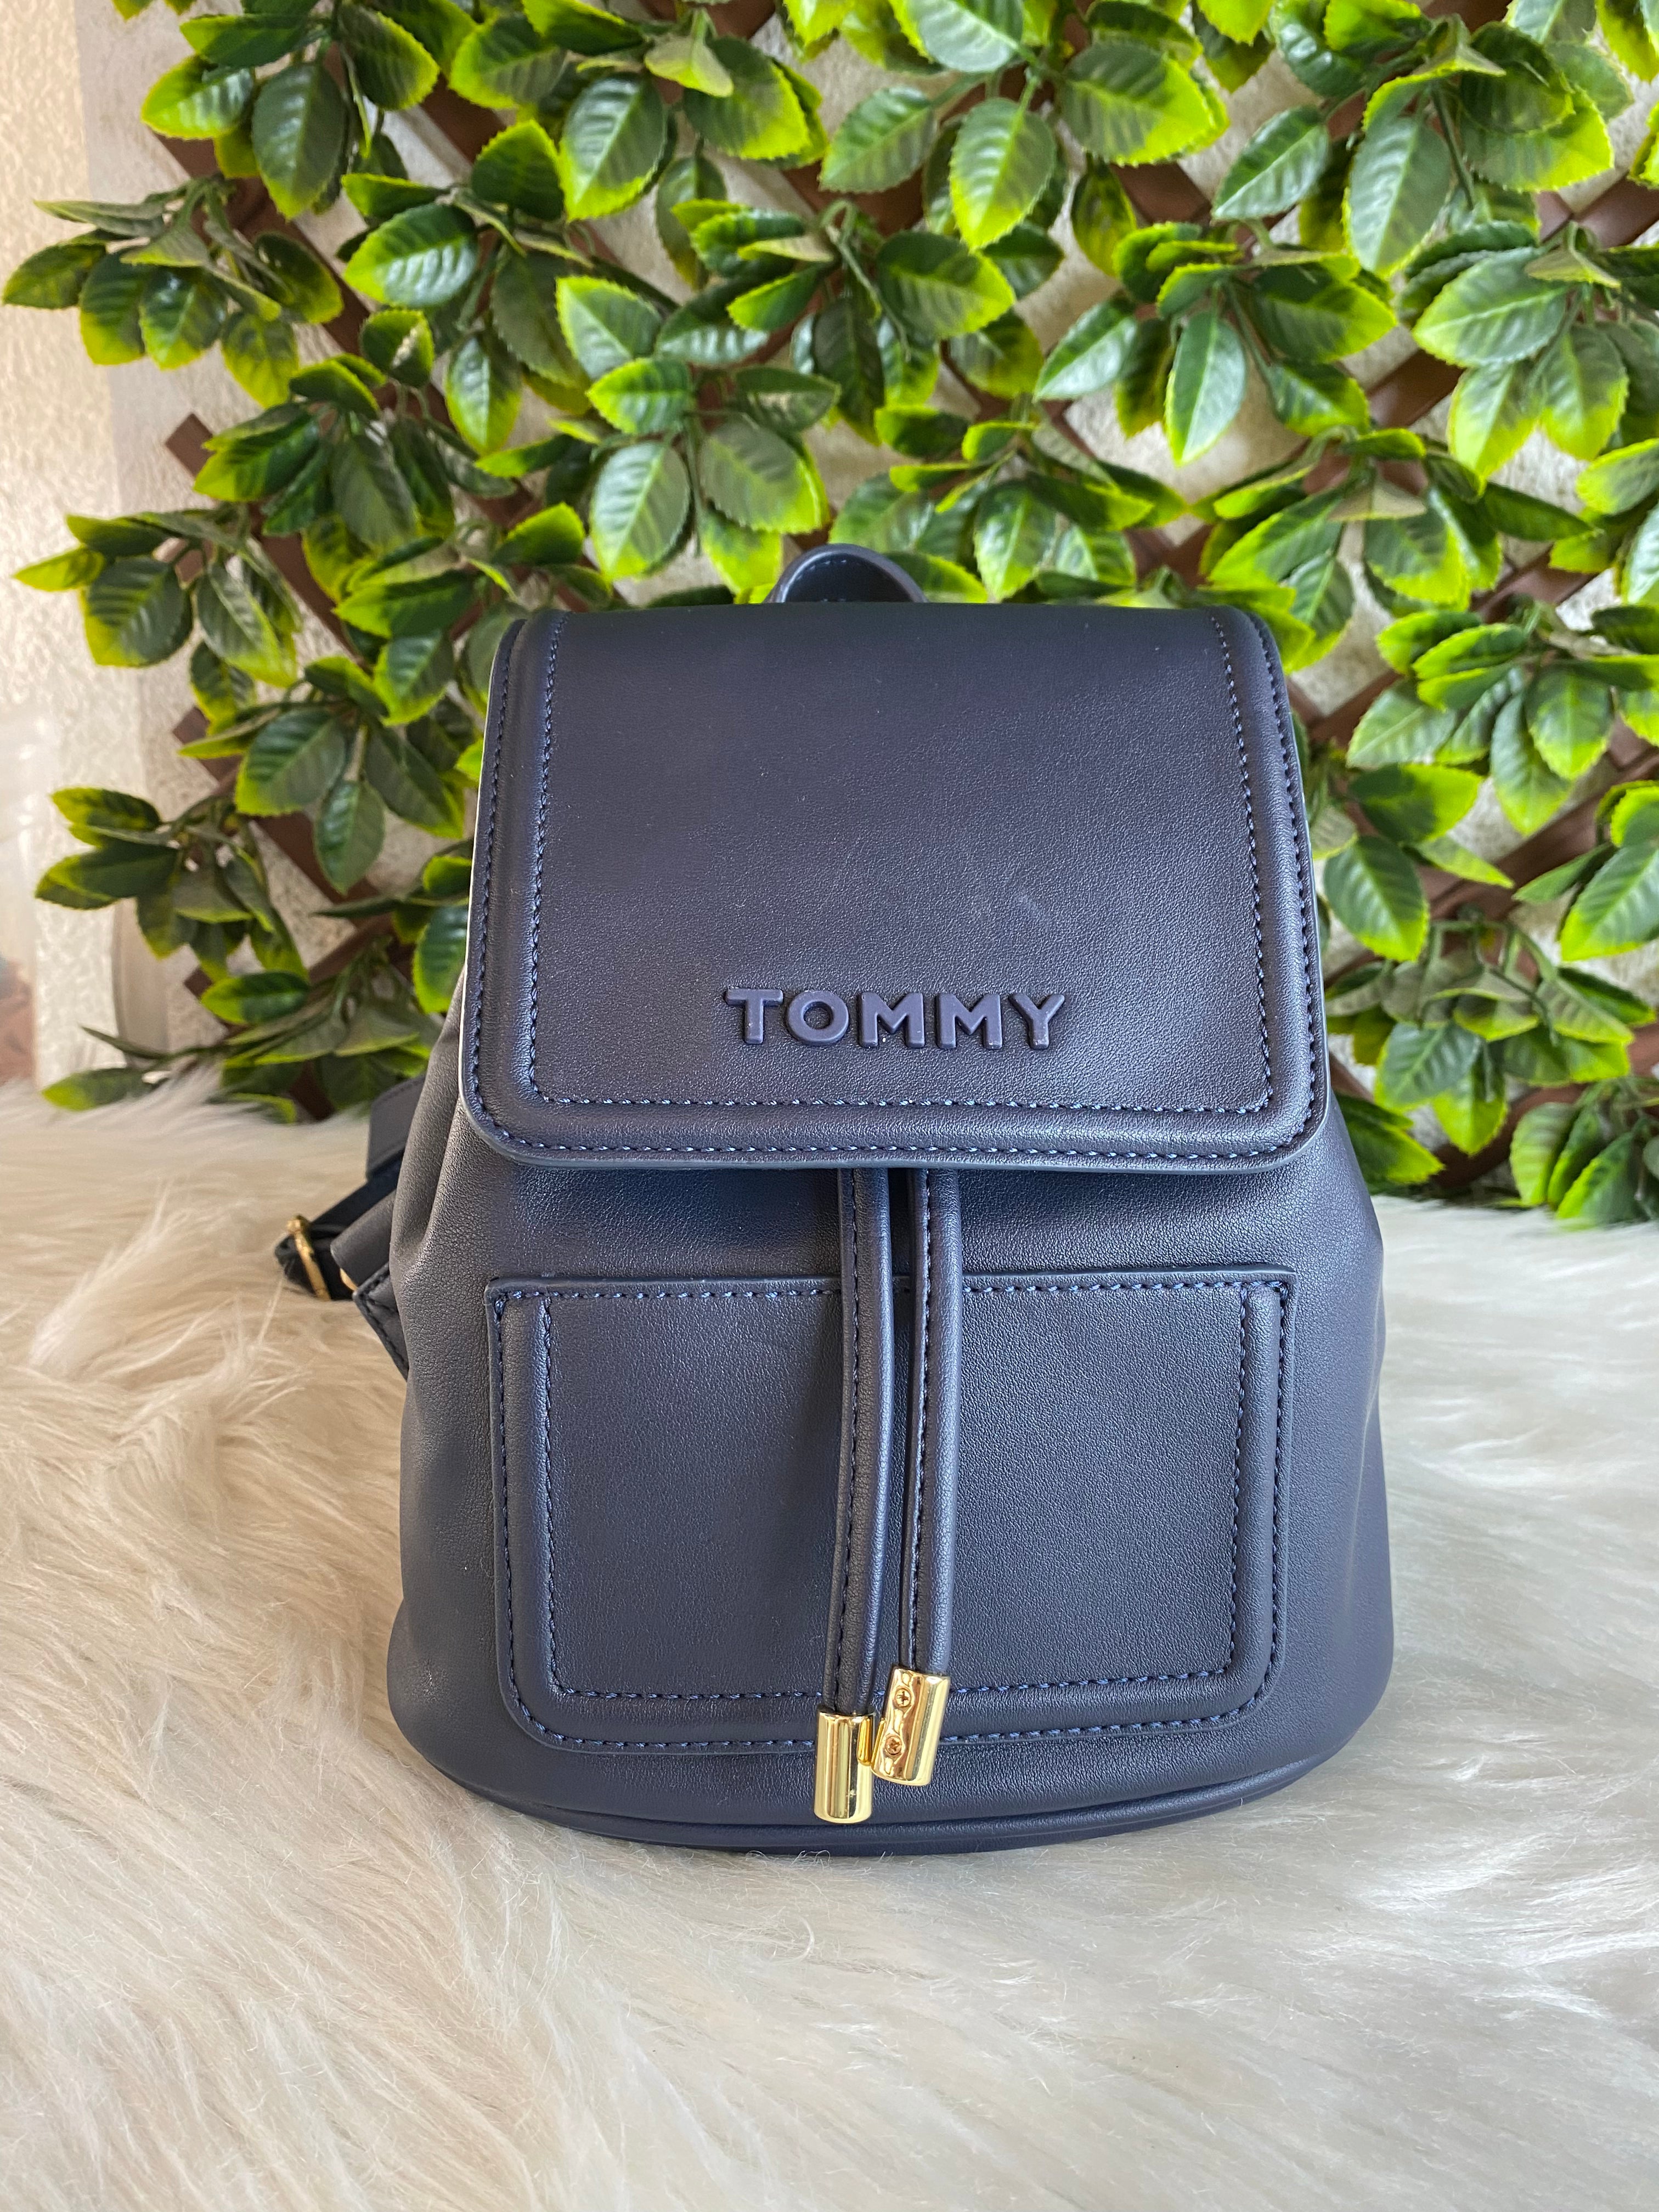 Mochila Tommy Hilfiger rayas azul con rojo- Backpack – Success Boutique Cuu